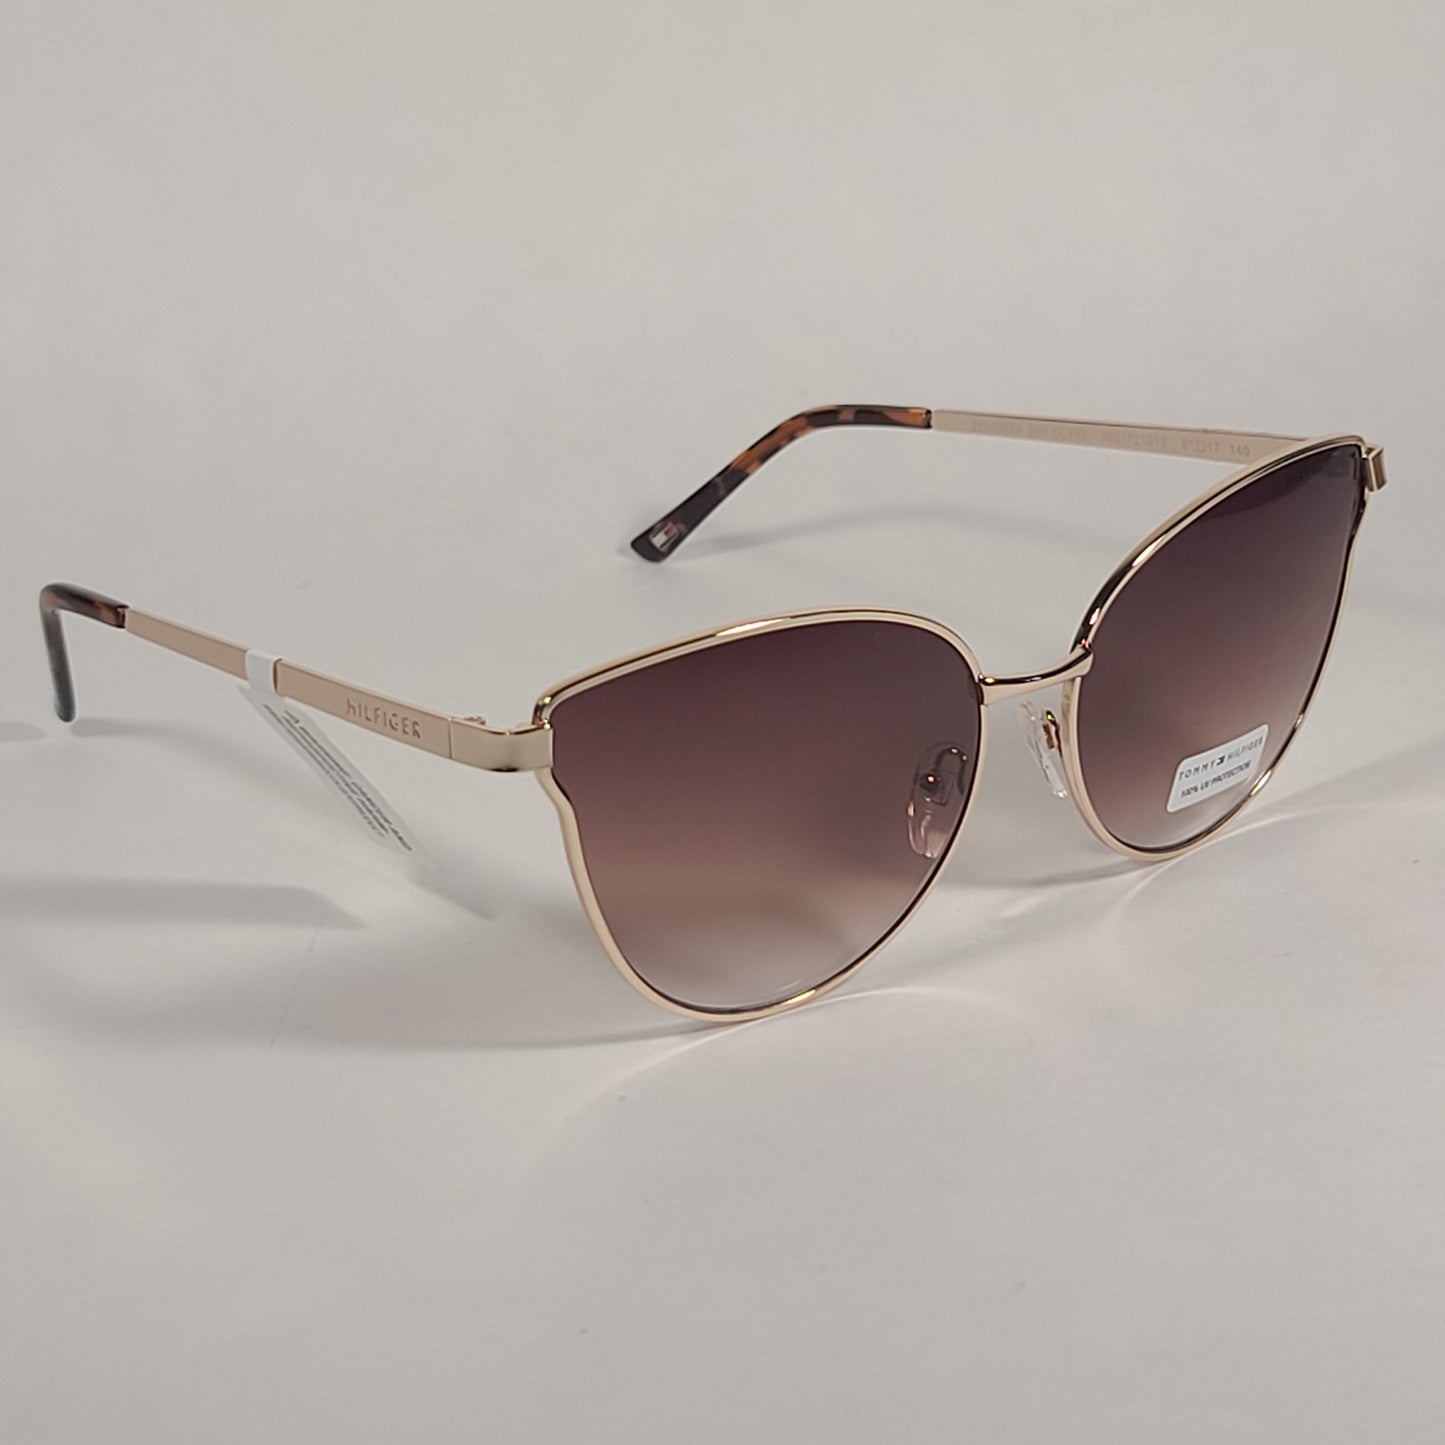 Tommy Hilfiger Zendaya Cat Eye Sunglasses Gold Frame Brown Gradient Lens ZENDAYA WM OL482 - Sunglasses